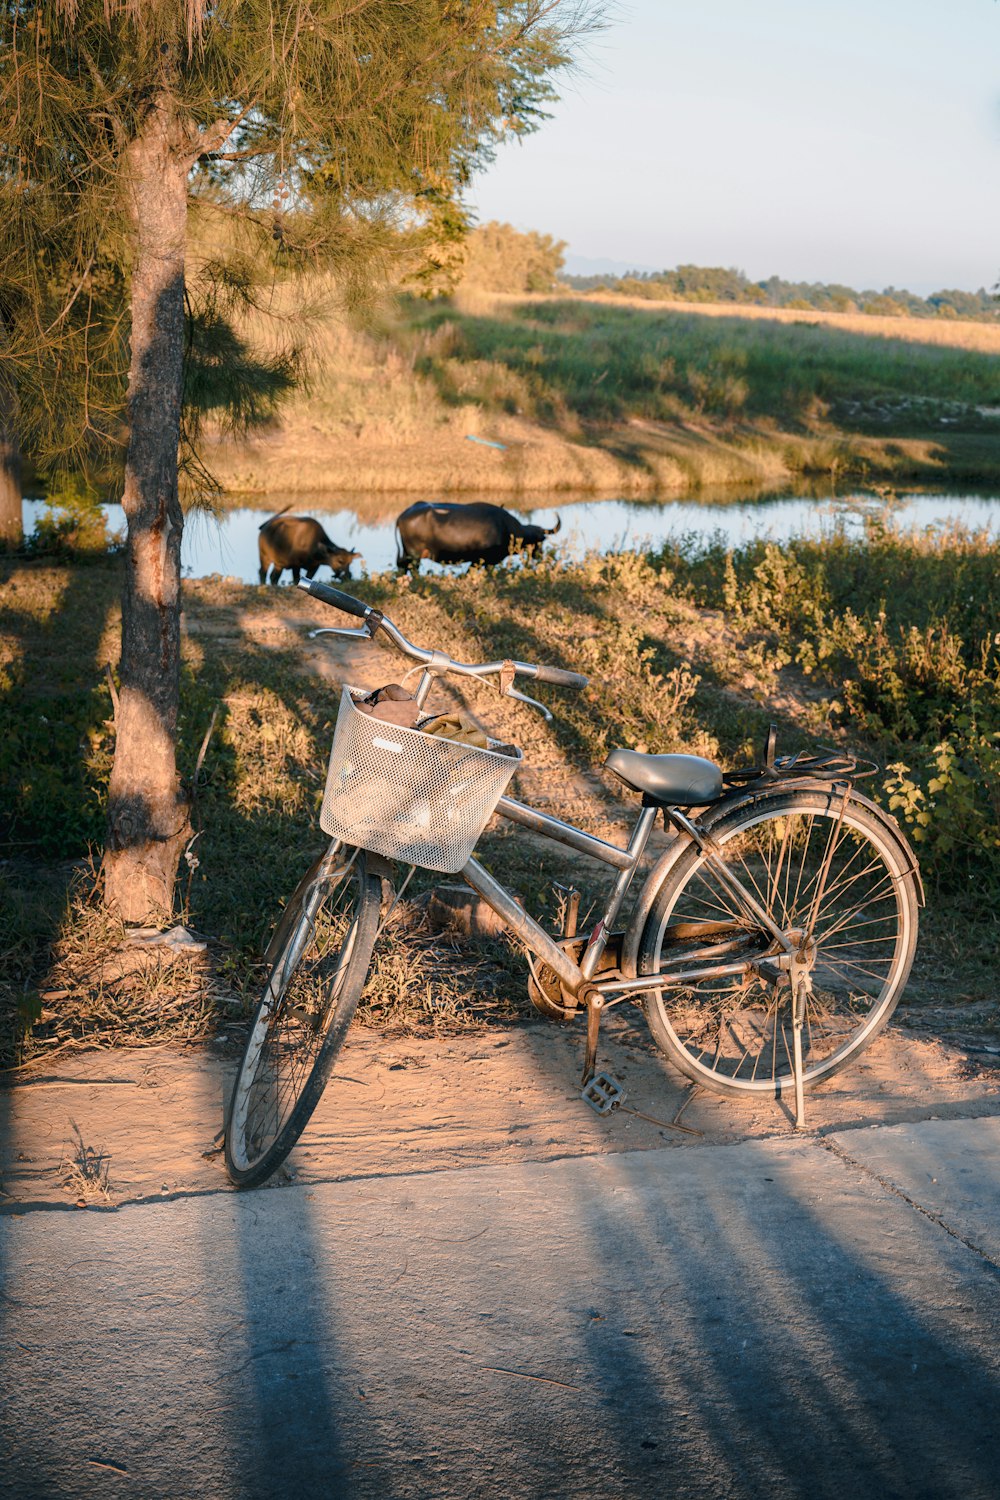 black bicycle on brown dirt road during daytime